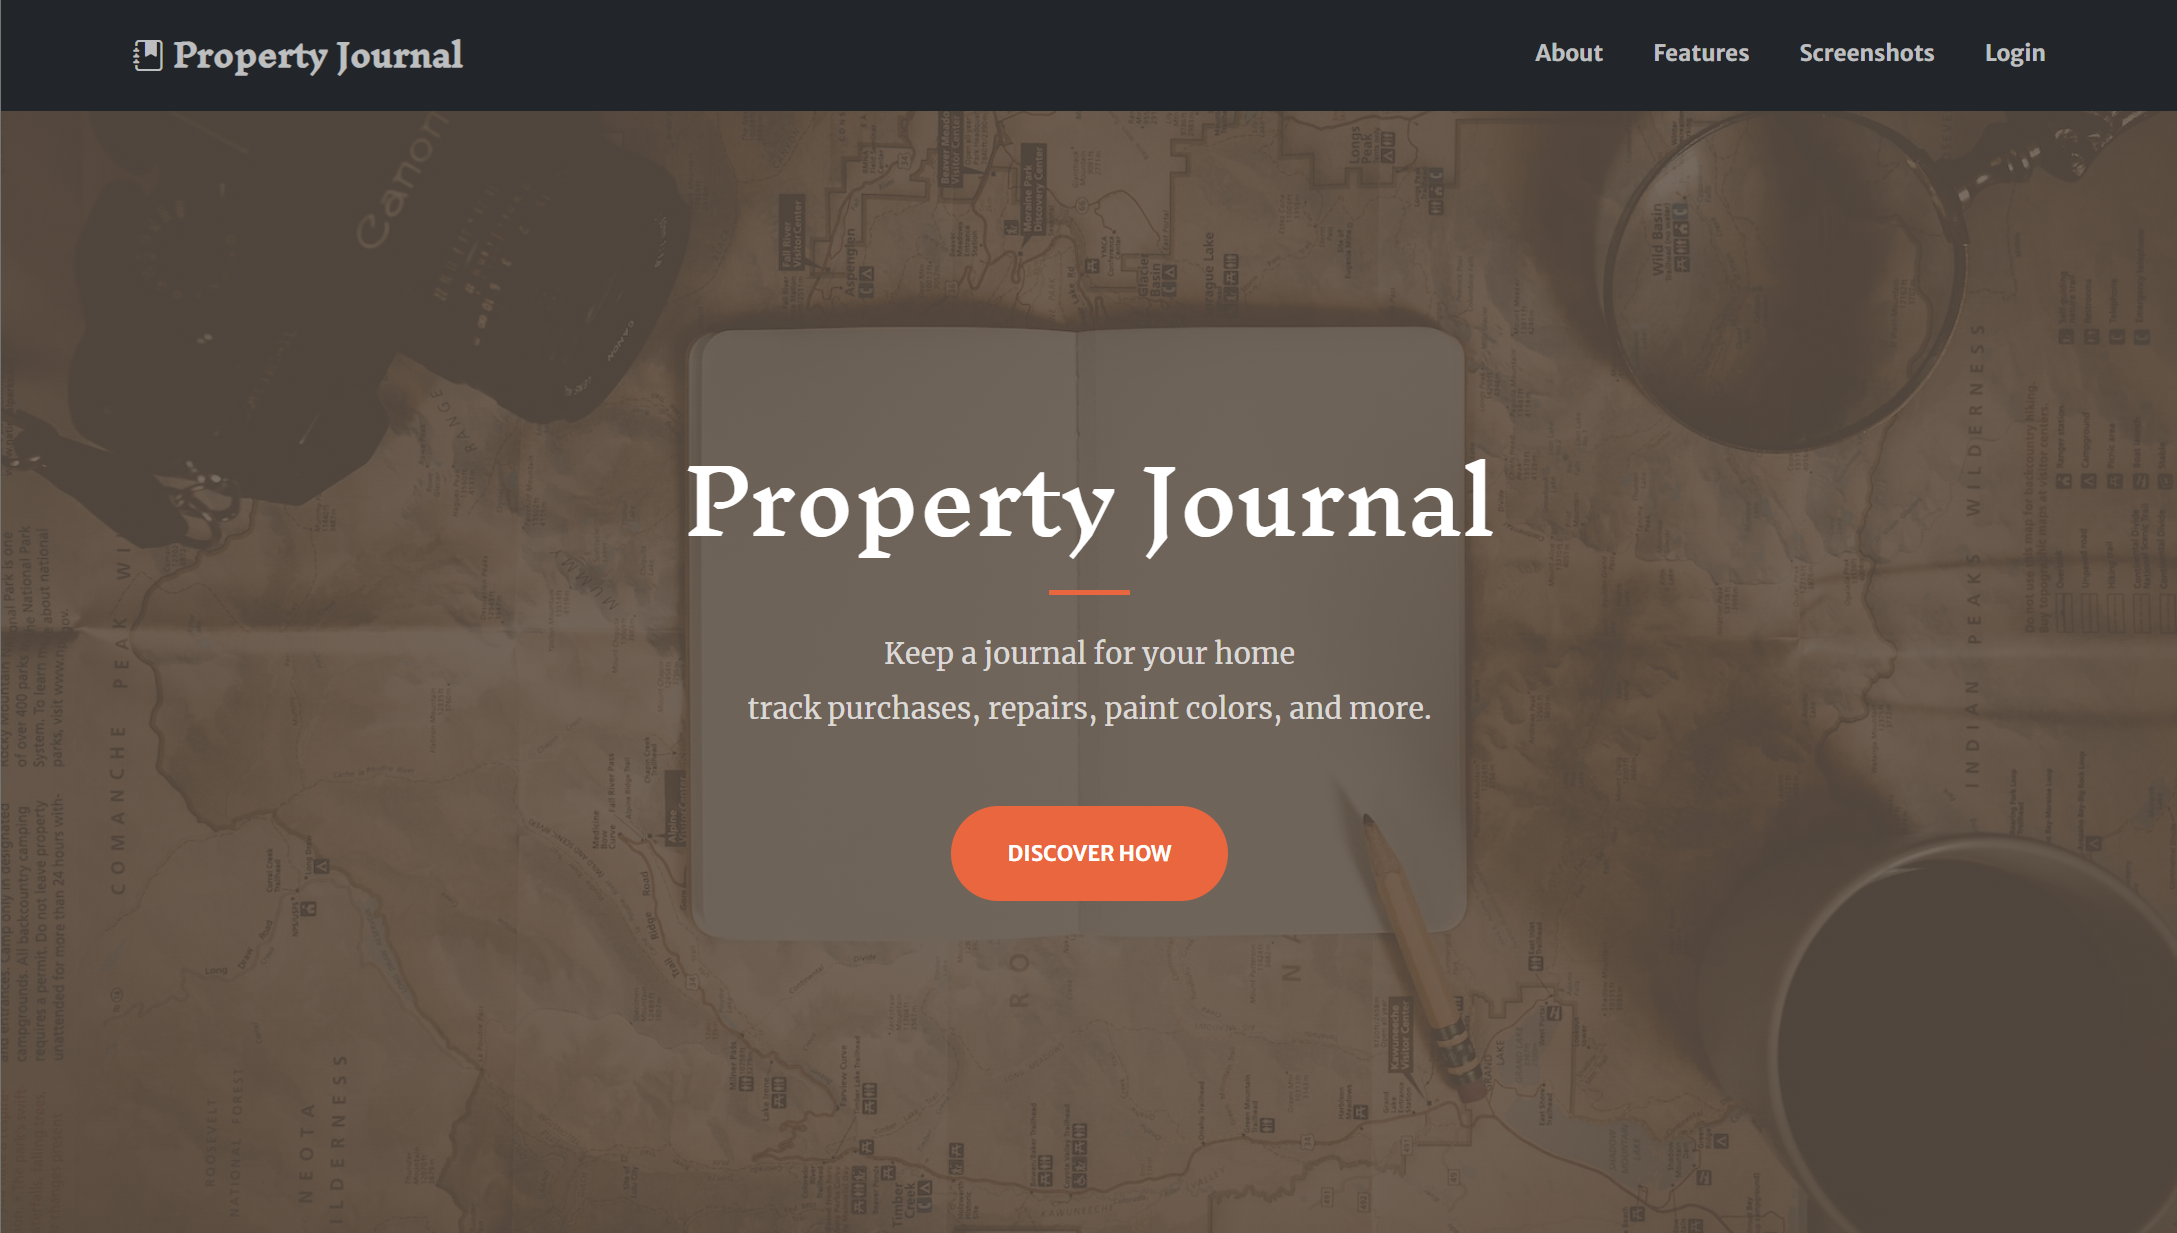 Property Journal landing page.